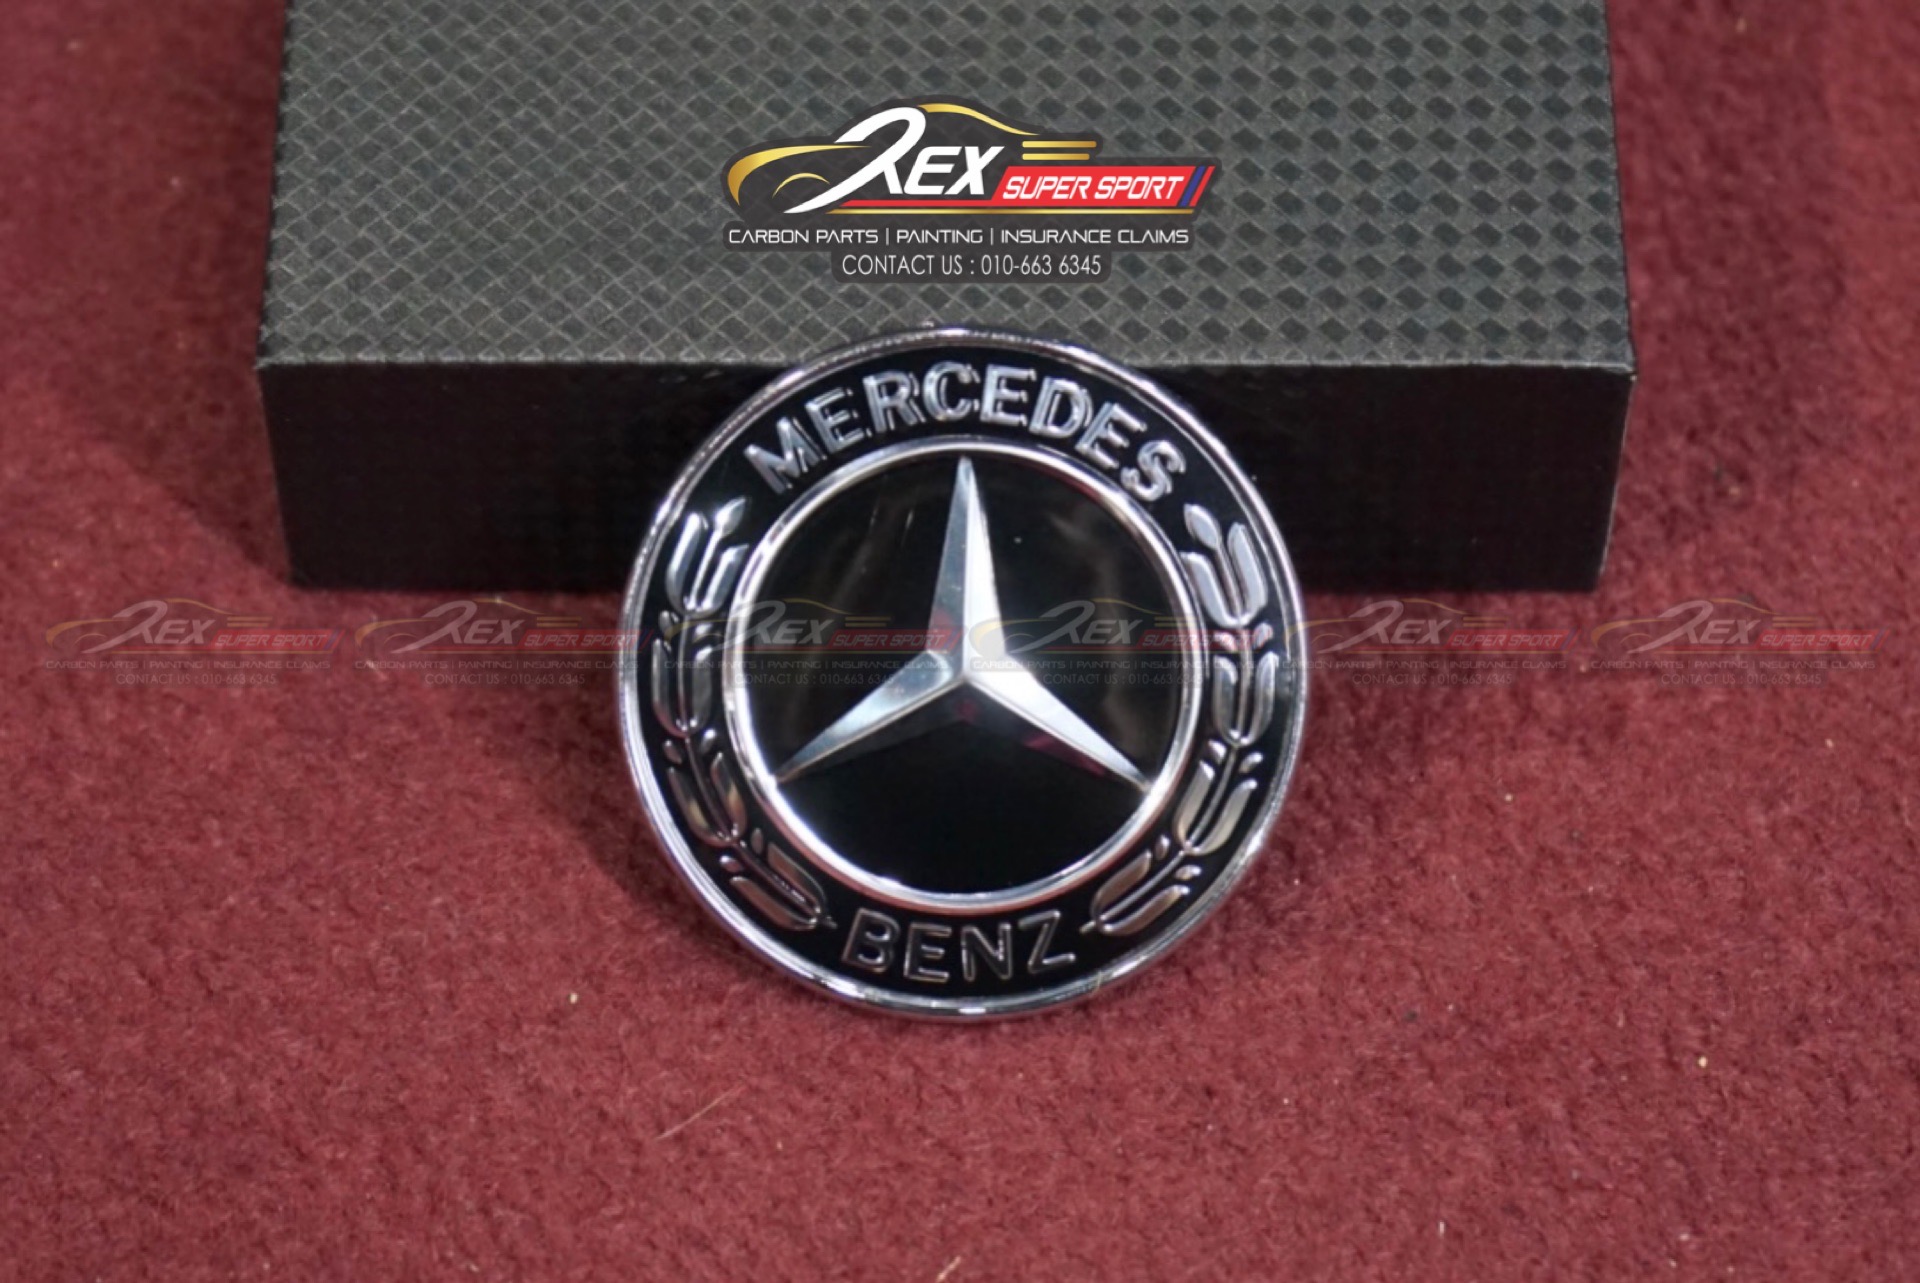 Mercedes CLA W117 A-Class W176 GLA X156 Front Bonnet Logo Badges Emblem - Rexsupersport - Specializes In Providing Carbon Parts and Accessories